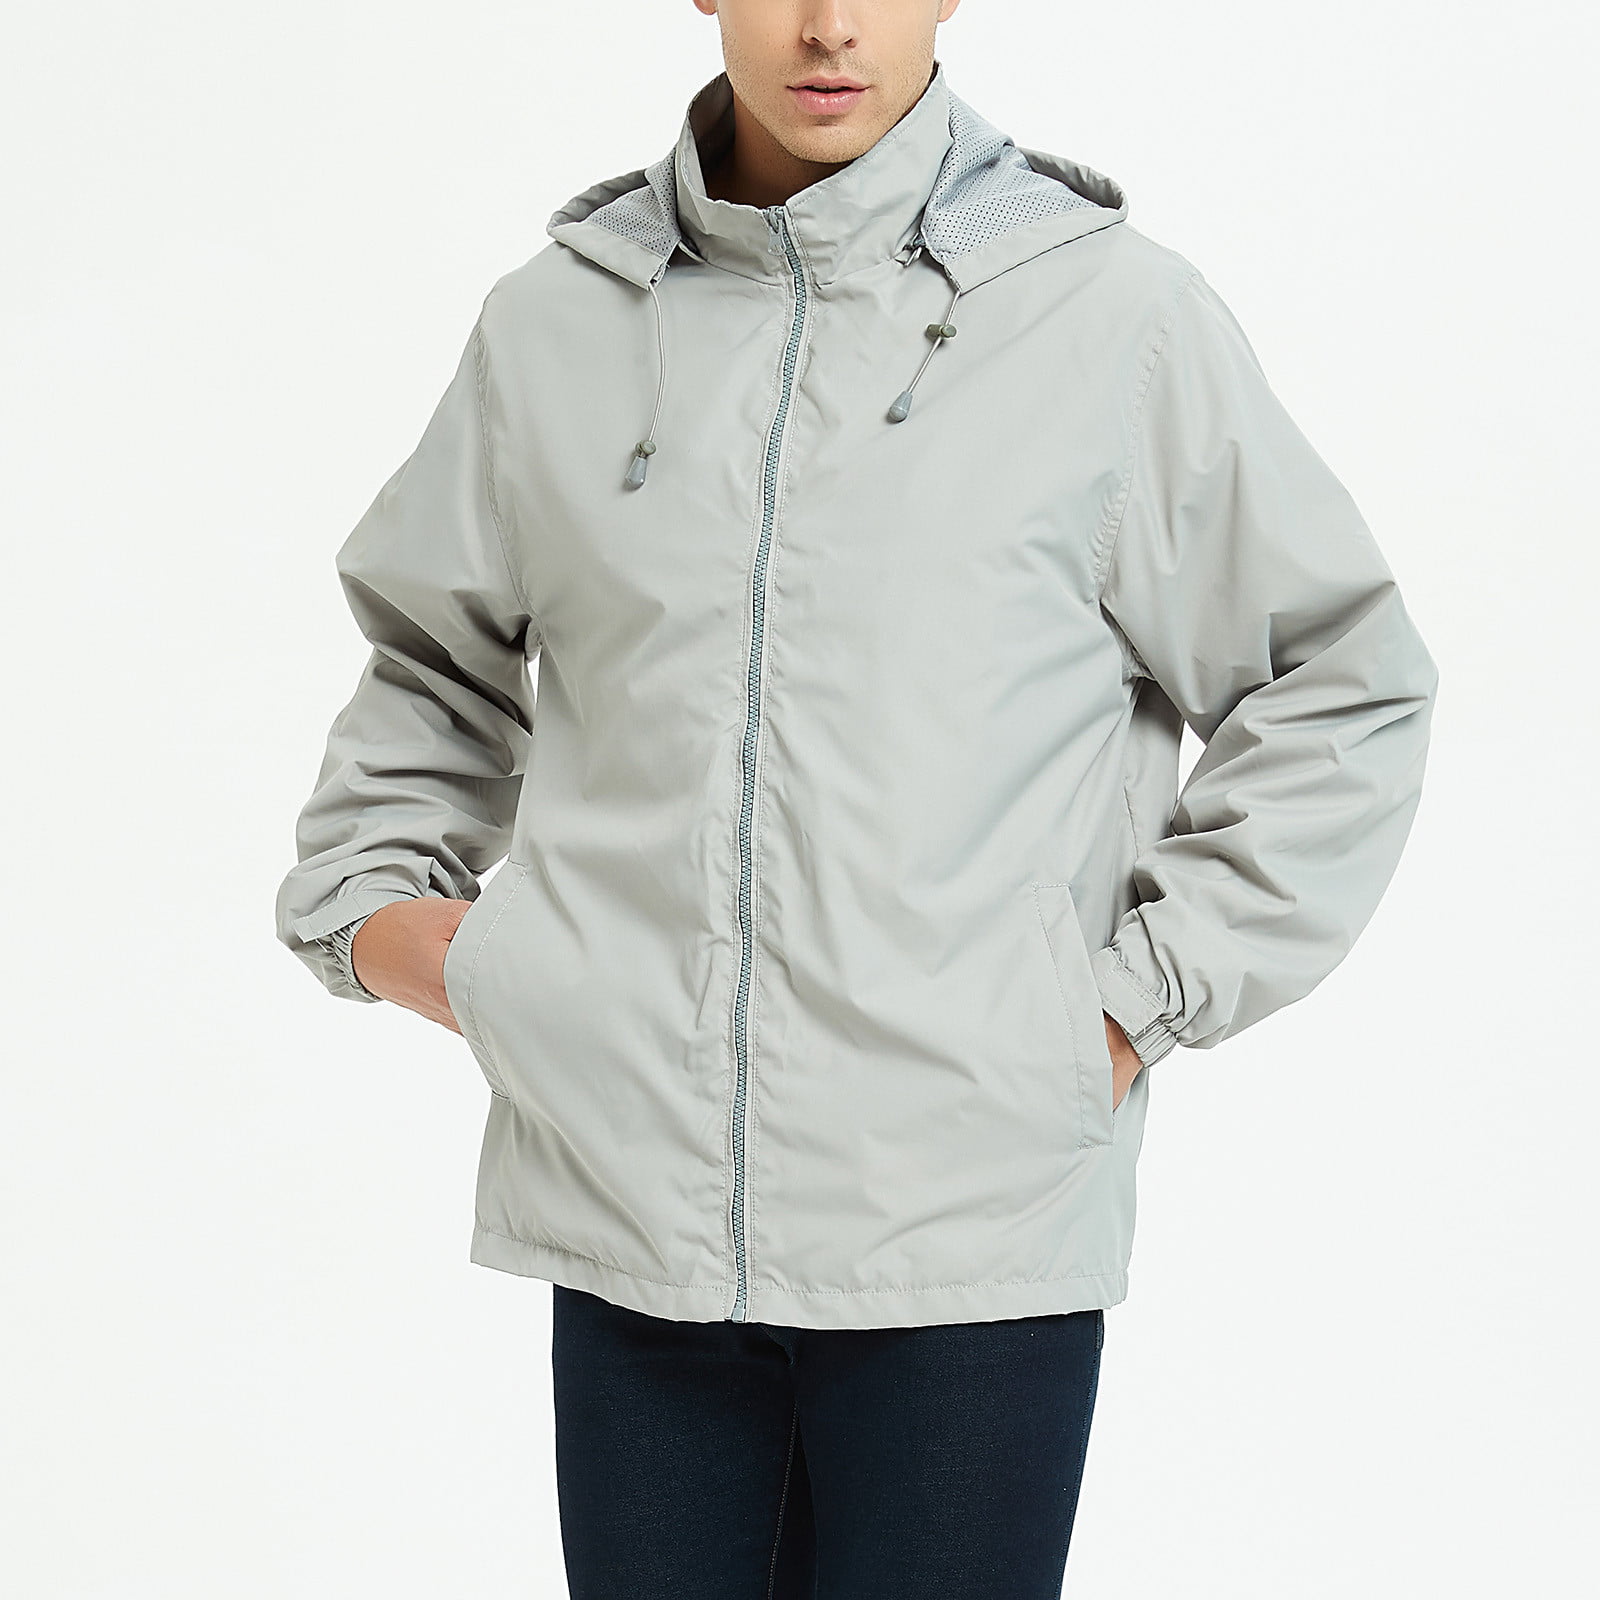 HAPIMO Sales Men's Windbreaker Jacket Thin Section Zipper Hooded Windproof  Waterproof Cold Jacket Fall Winter Rushing Jacket with Pocket Gray S 